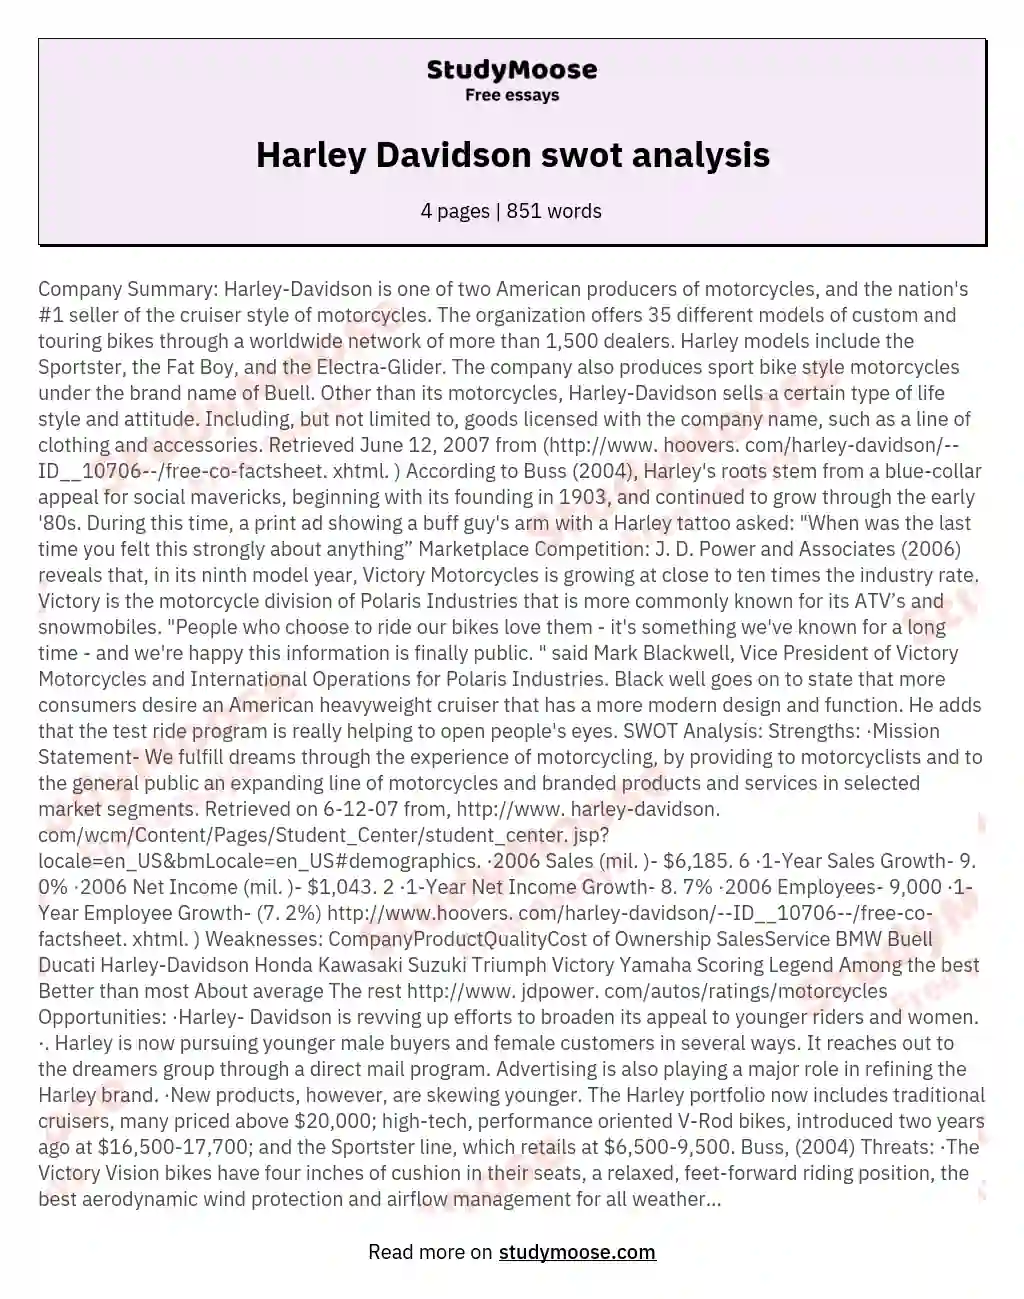 Harley Davidson swot analysis essay